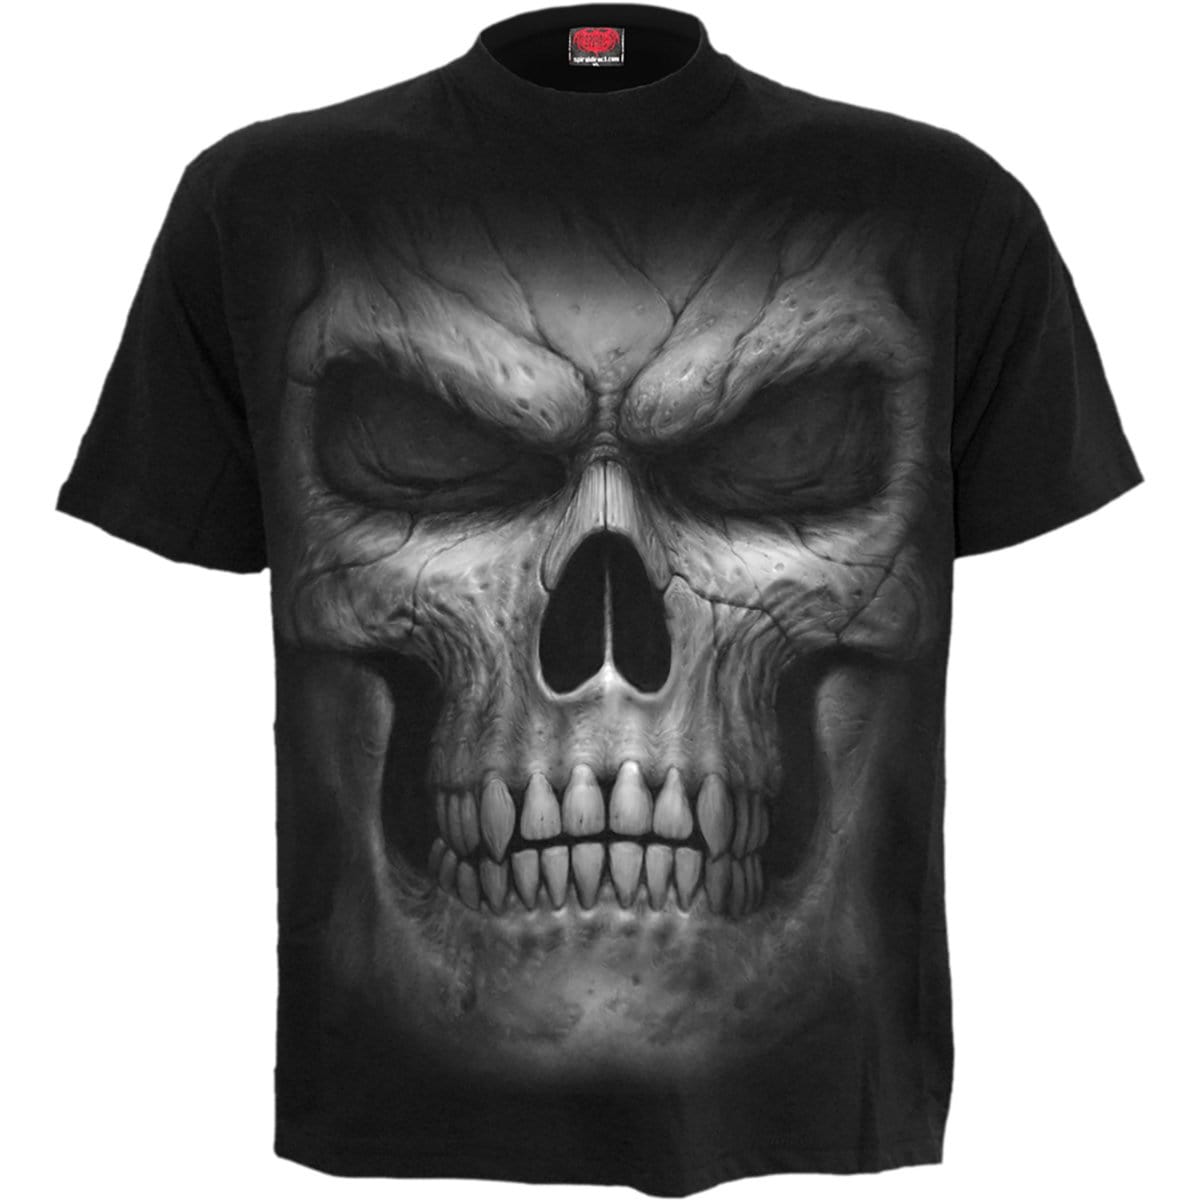 SHADOW MASTER - Front Print T-Shirt Black - Spiral USA